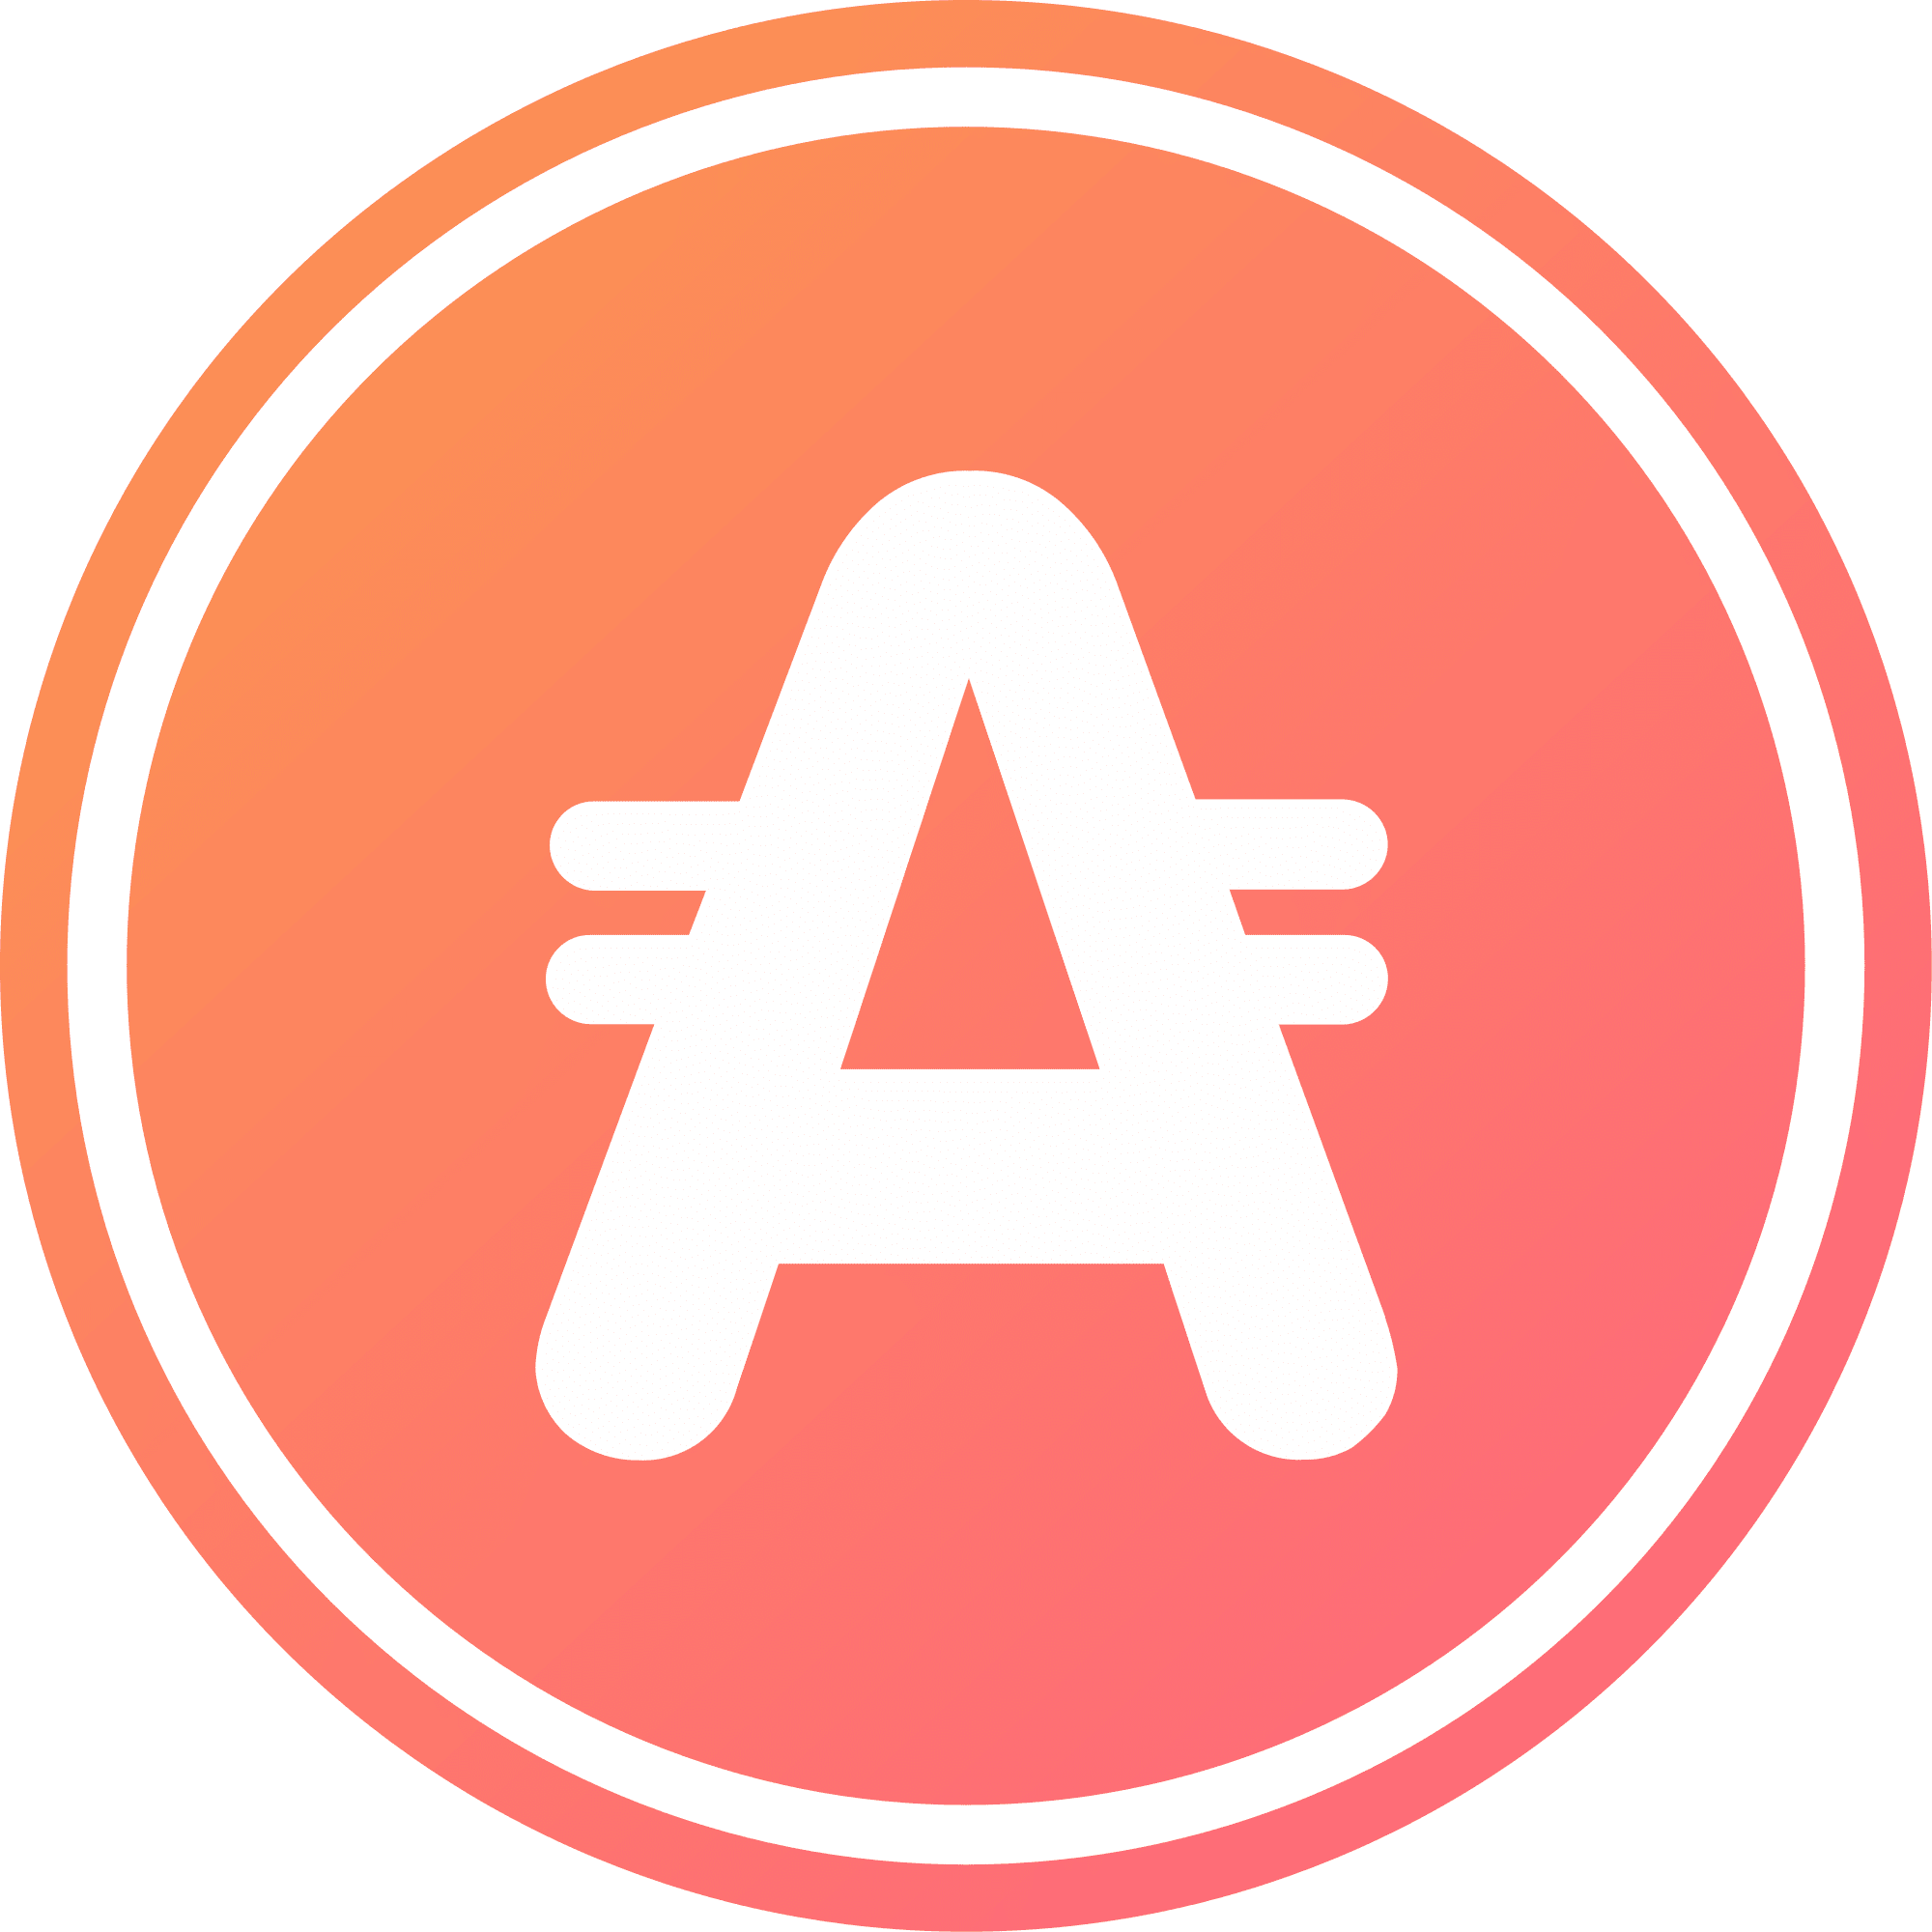 AppCoins logo in png format